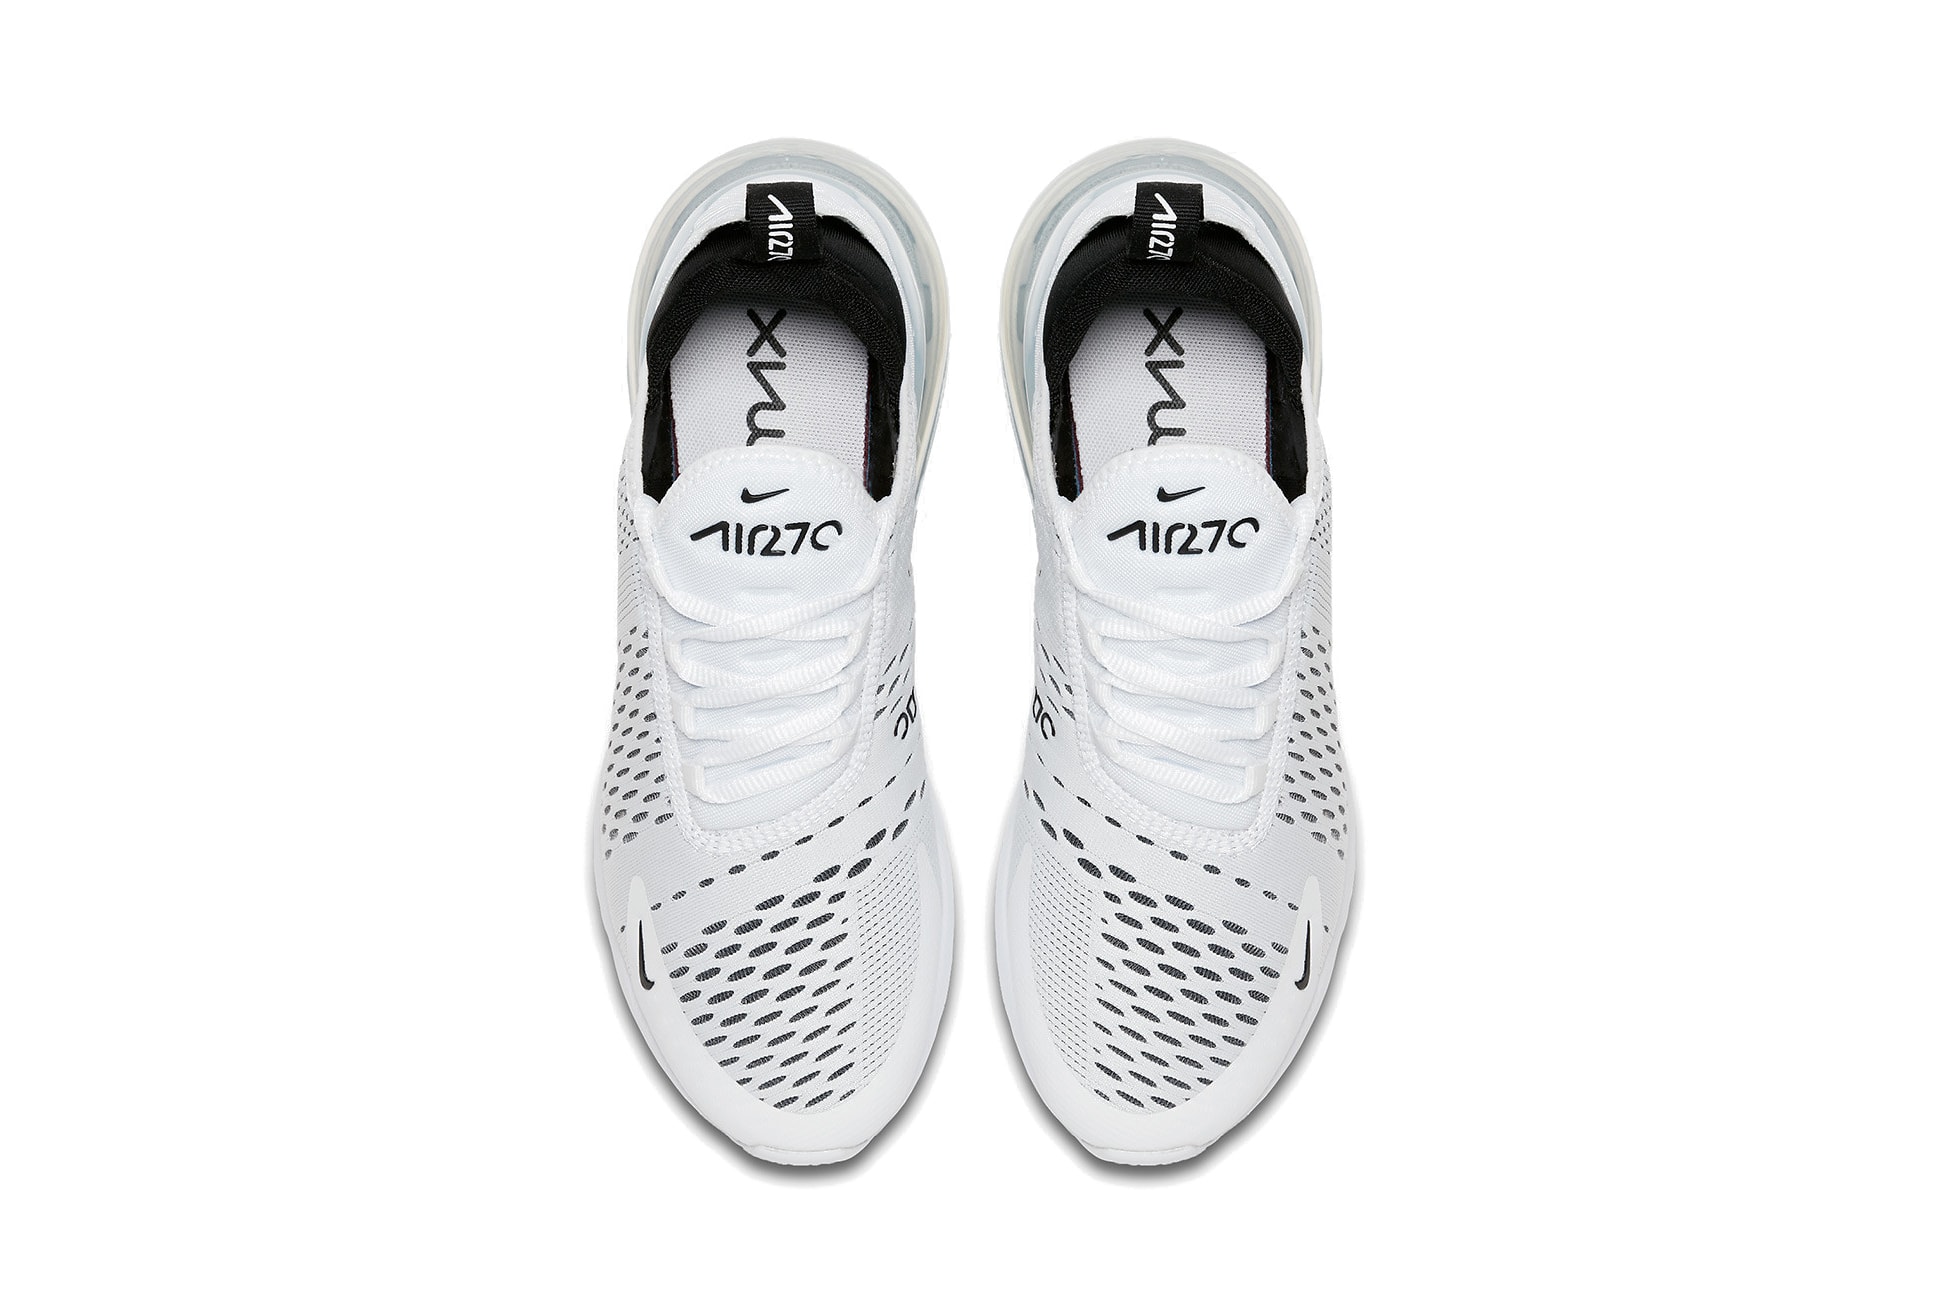 Nike Air Max 270 Women's White/Black Colorway | Hypebae